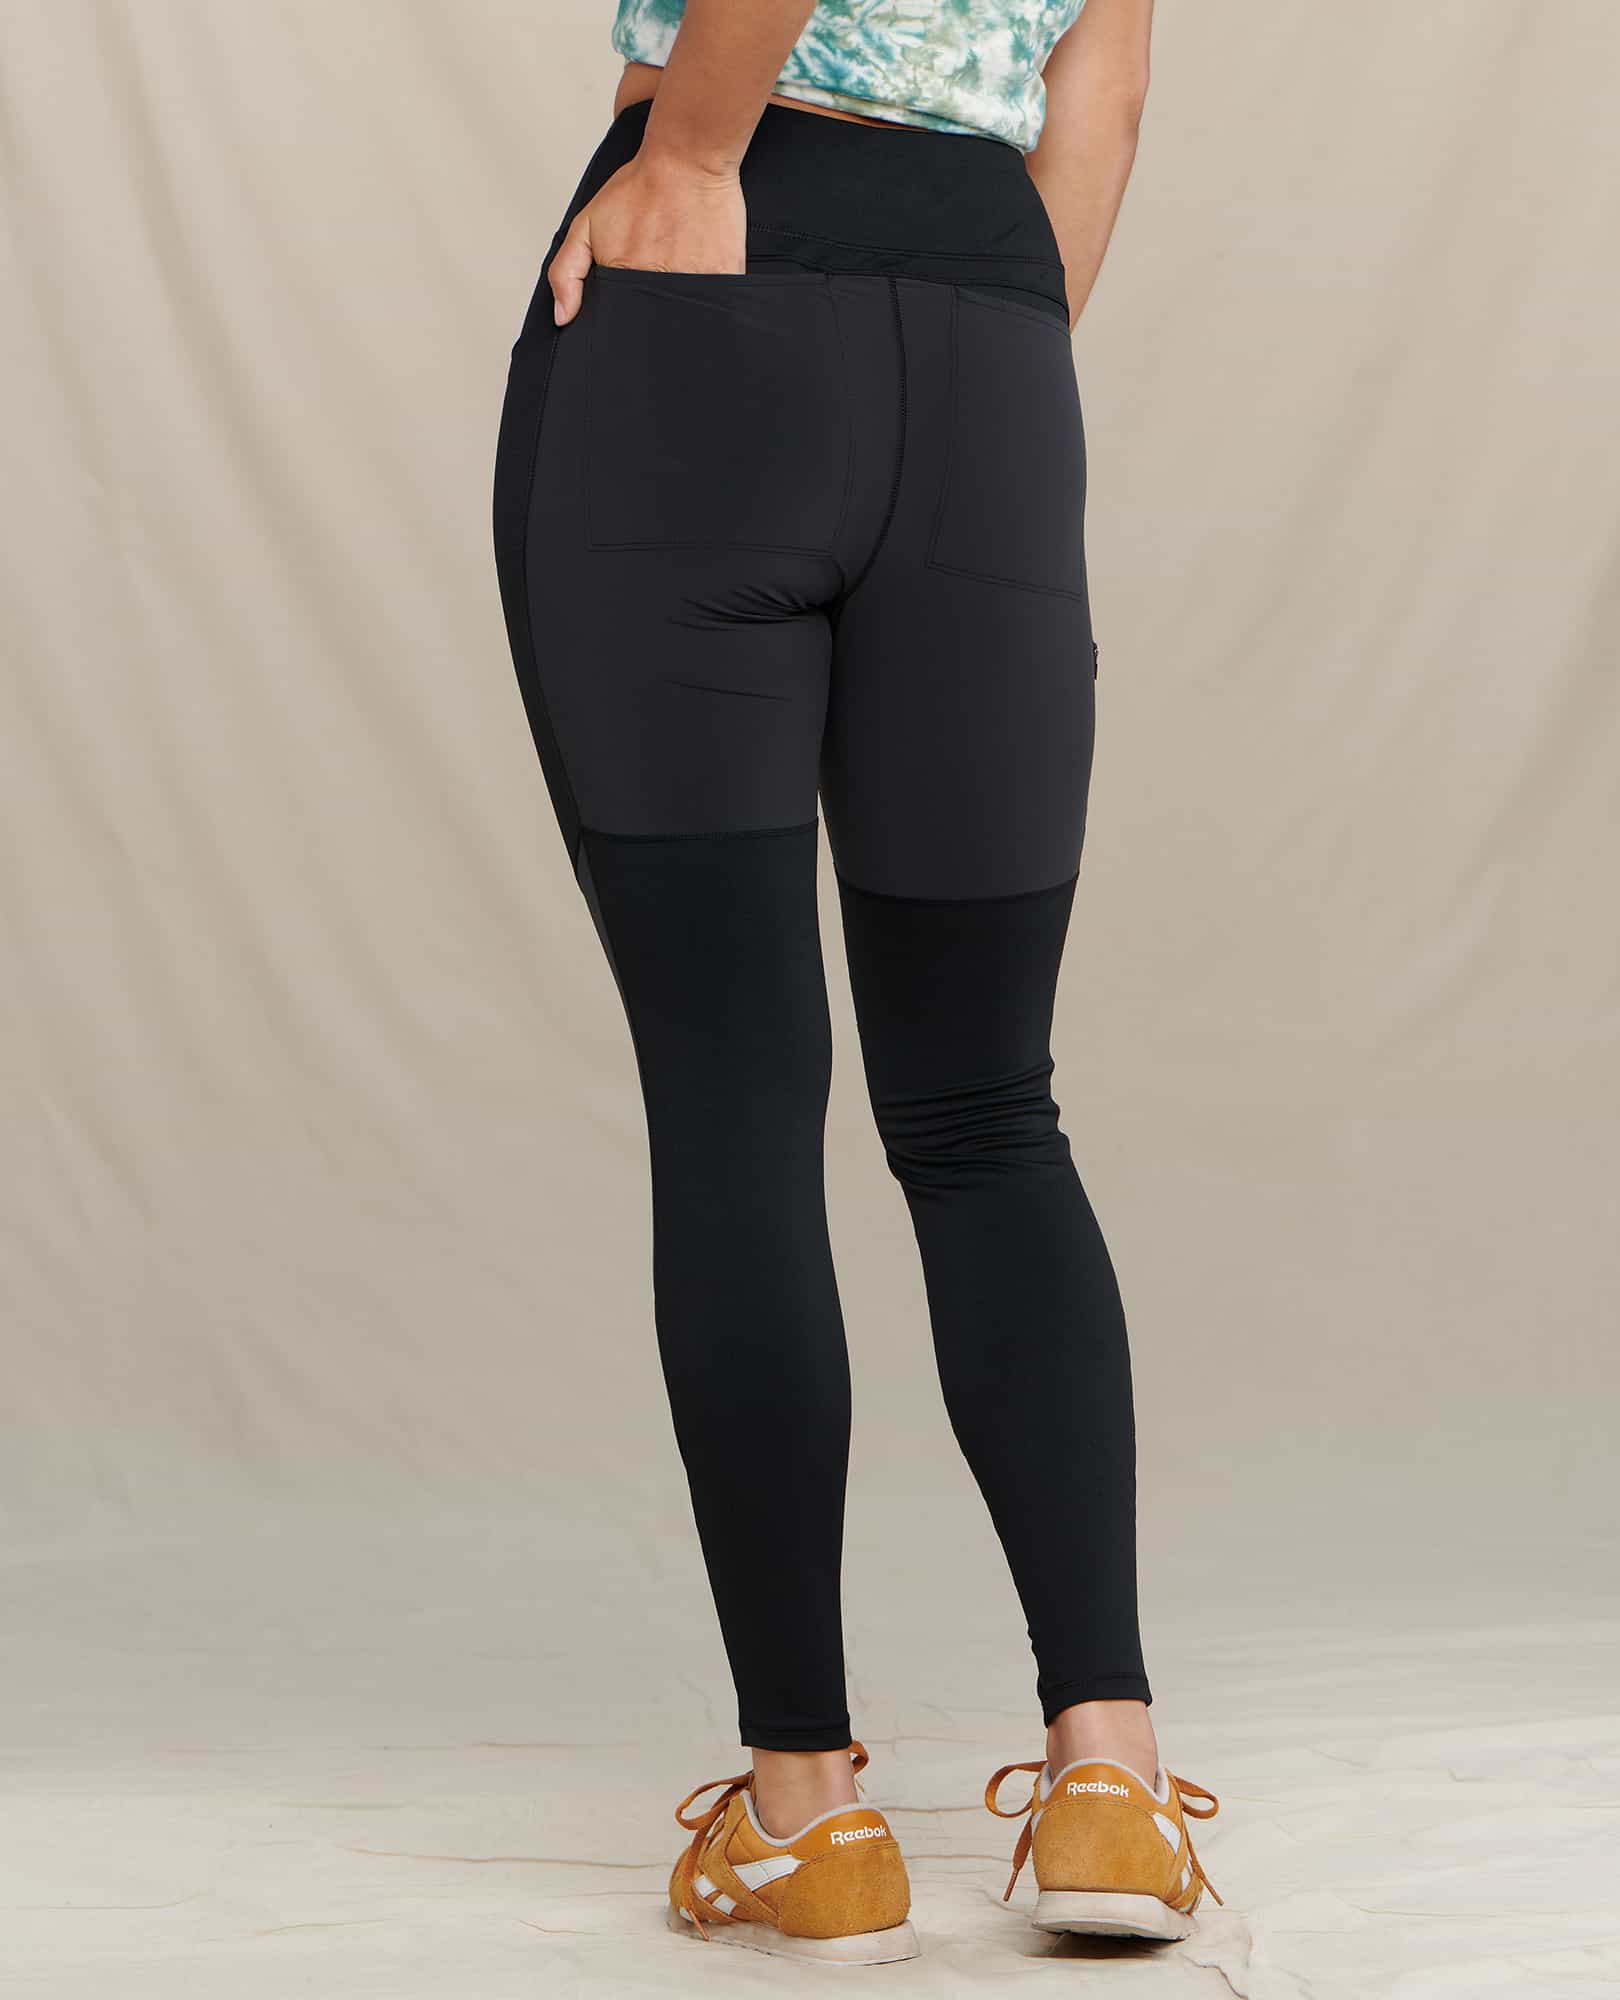 Odlo Tights Ascent - Walking trousers Women's, Buy online